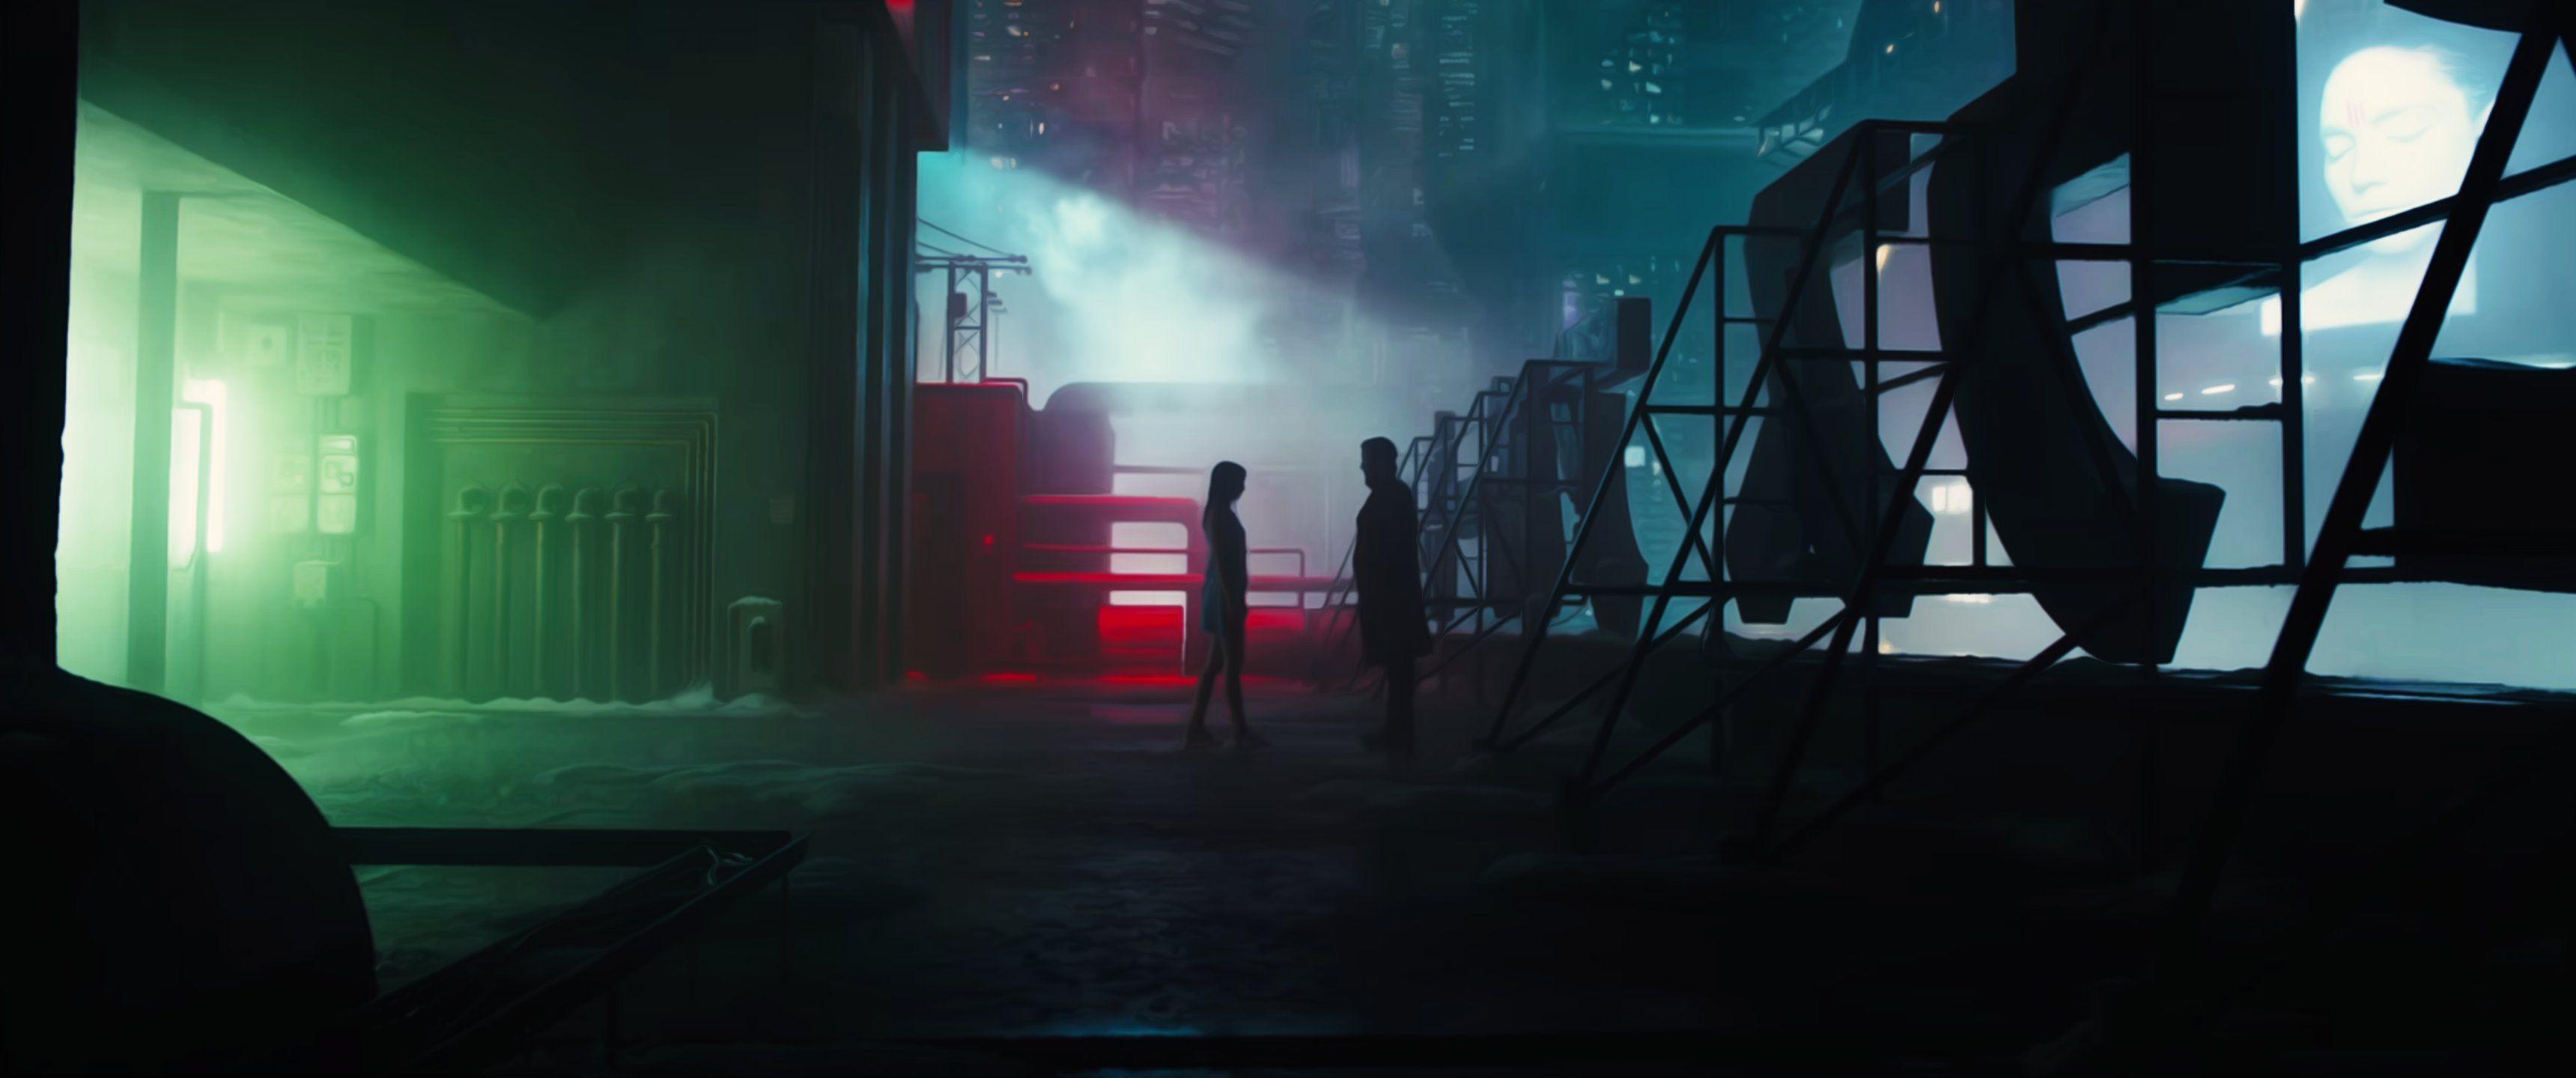 Blade Runner 2049 4k Wallpapers Top Free Blade Runner 2049 4k Backgrounds Wallpaperaccess 4438